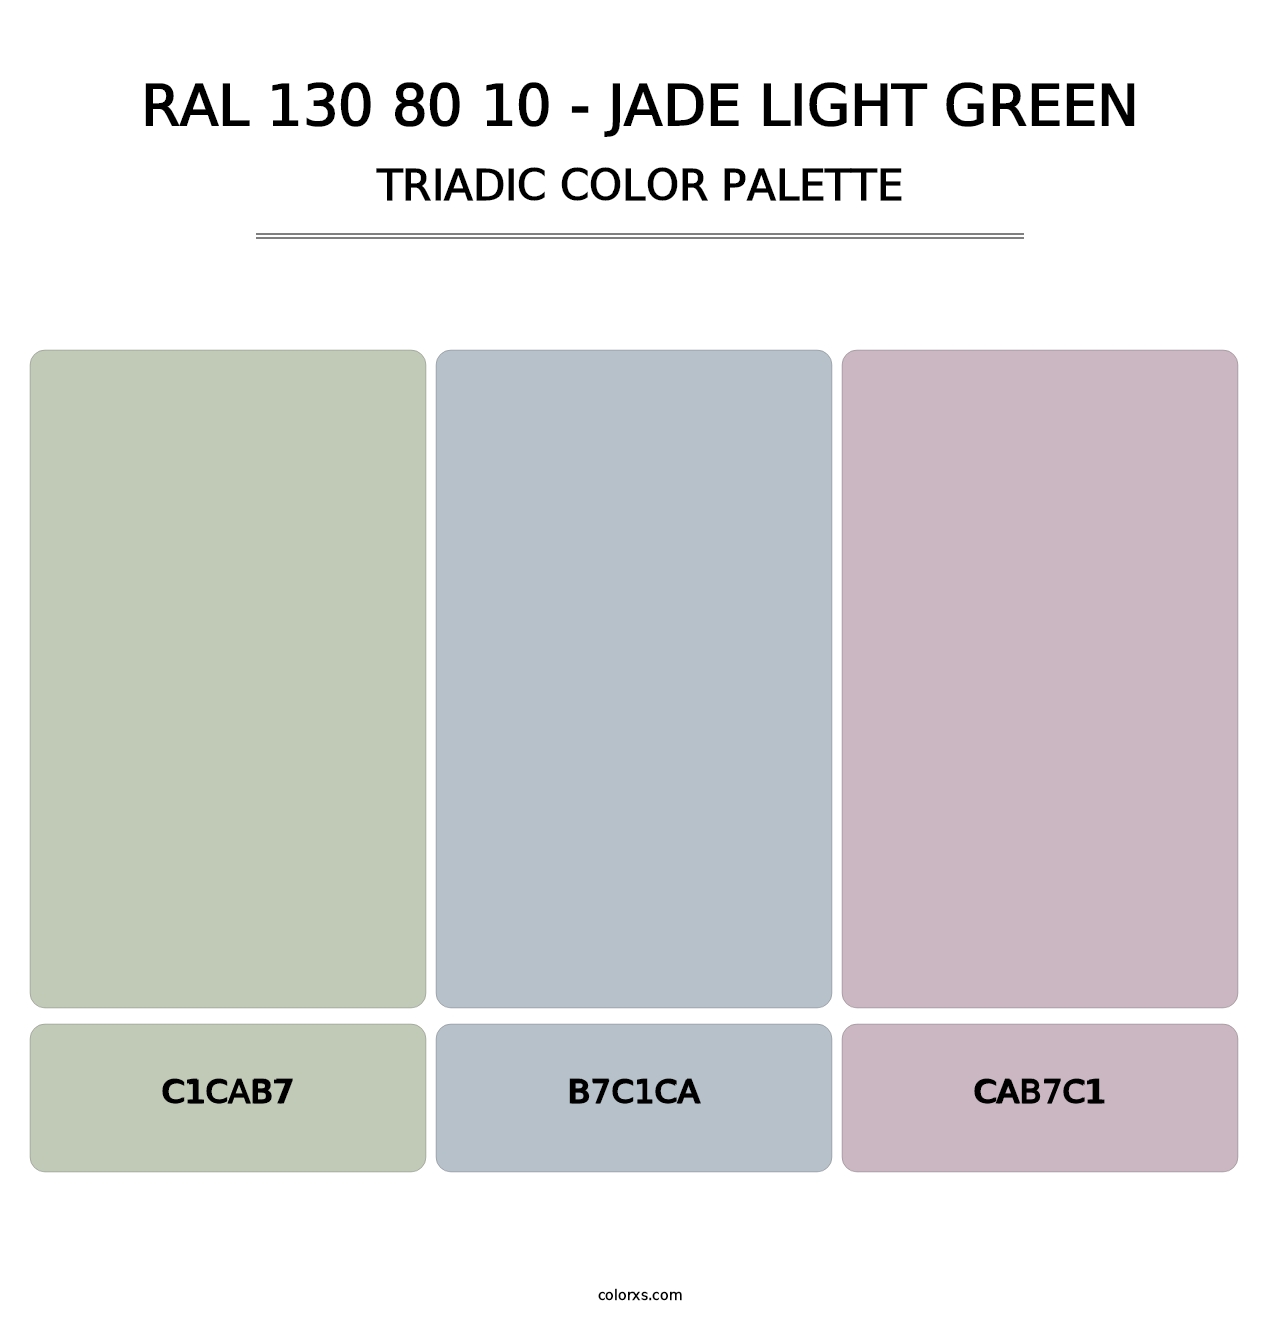 RAL 130 80 10 - Jade Light Green - Triadic Color Palette